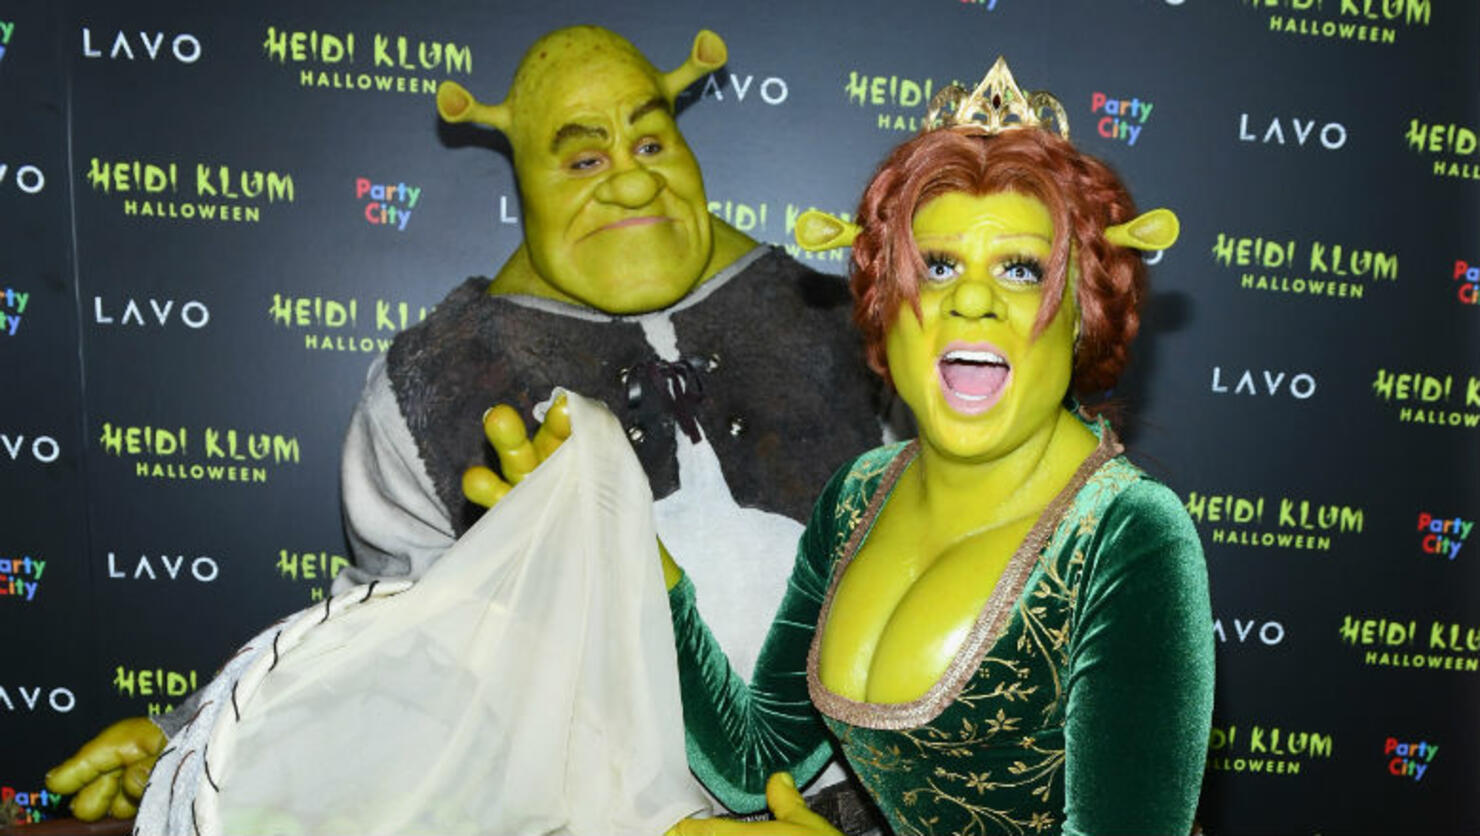 Heidi Klum Dressed As Princess Fiona From 'Shrek' For Her Halloween ...